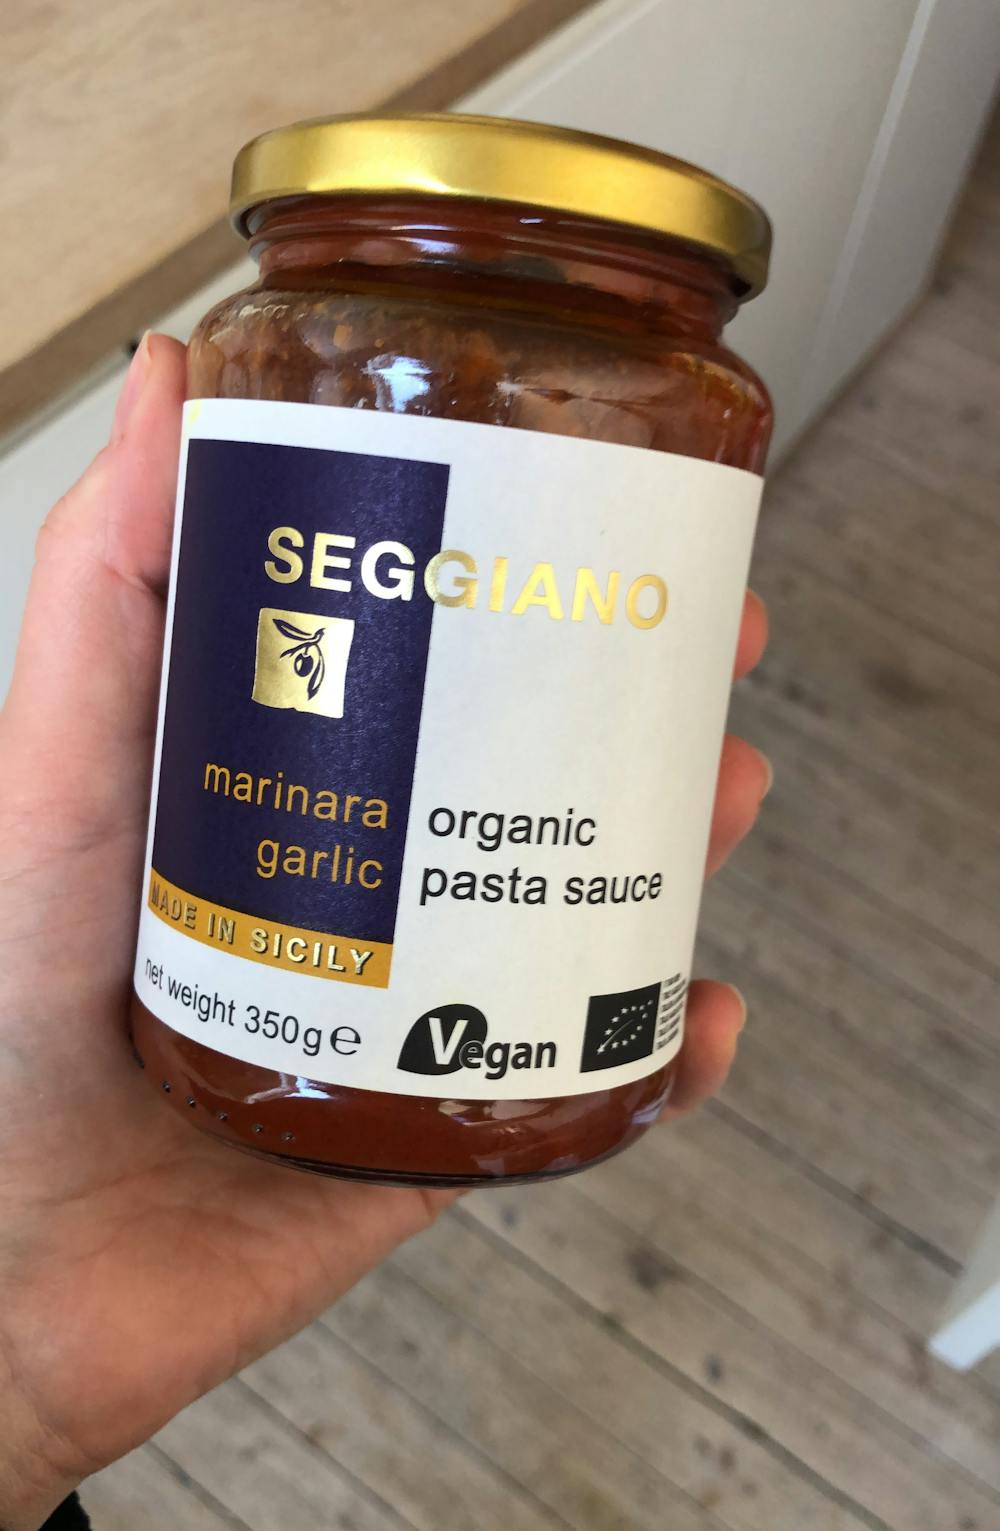 Marinara garlic, organic pasta sauce, Seggiano